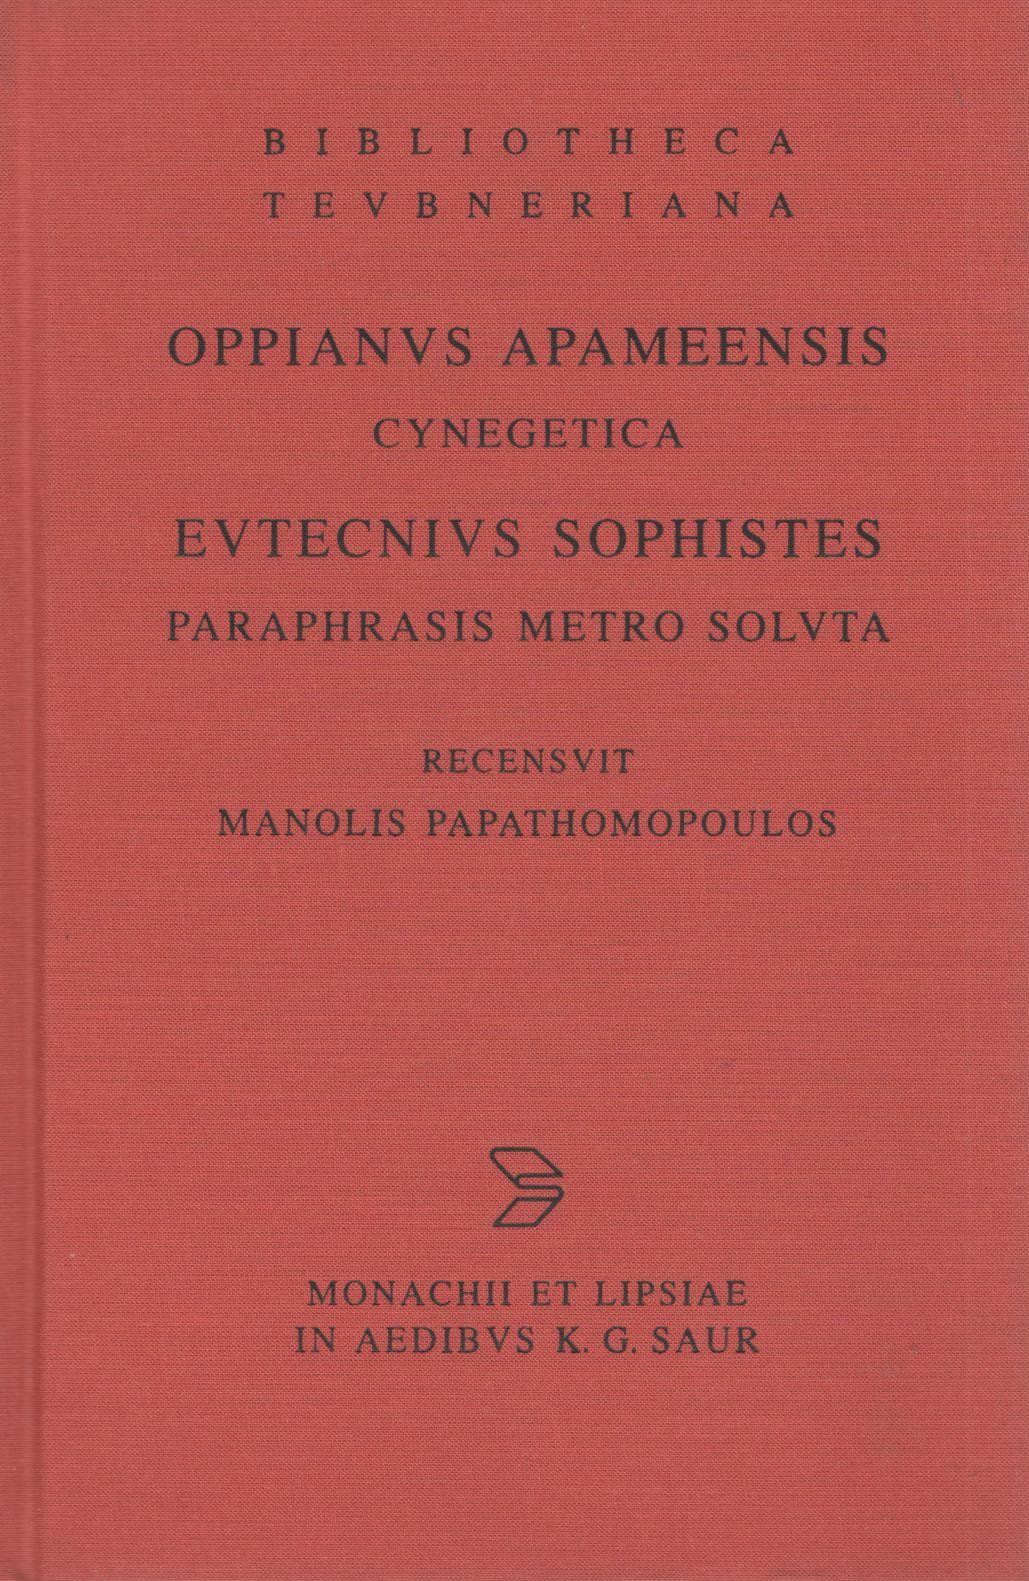 OPPIANUS APAMEENSIS CYNEGETICA - EUTECNIUS SOPHISTES PARAPHRASIS METRO SOLUTA